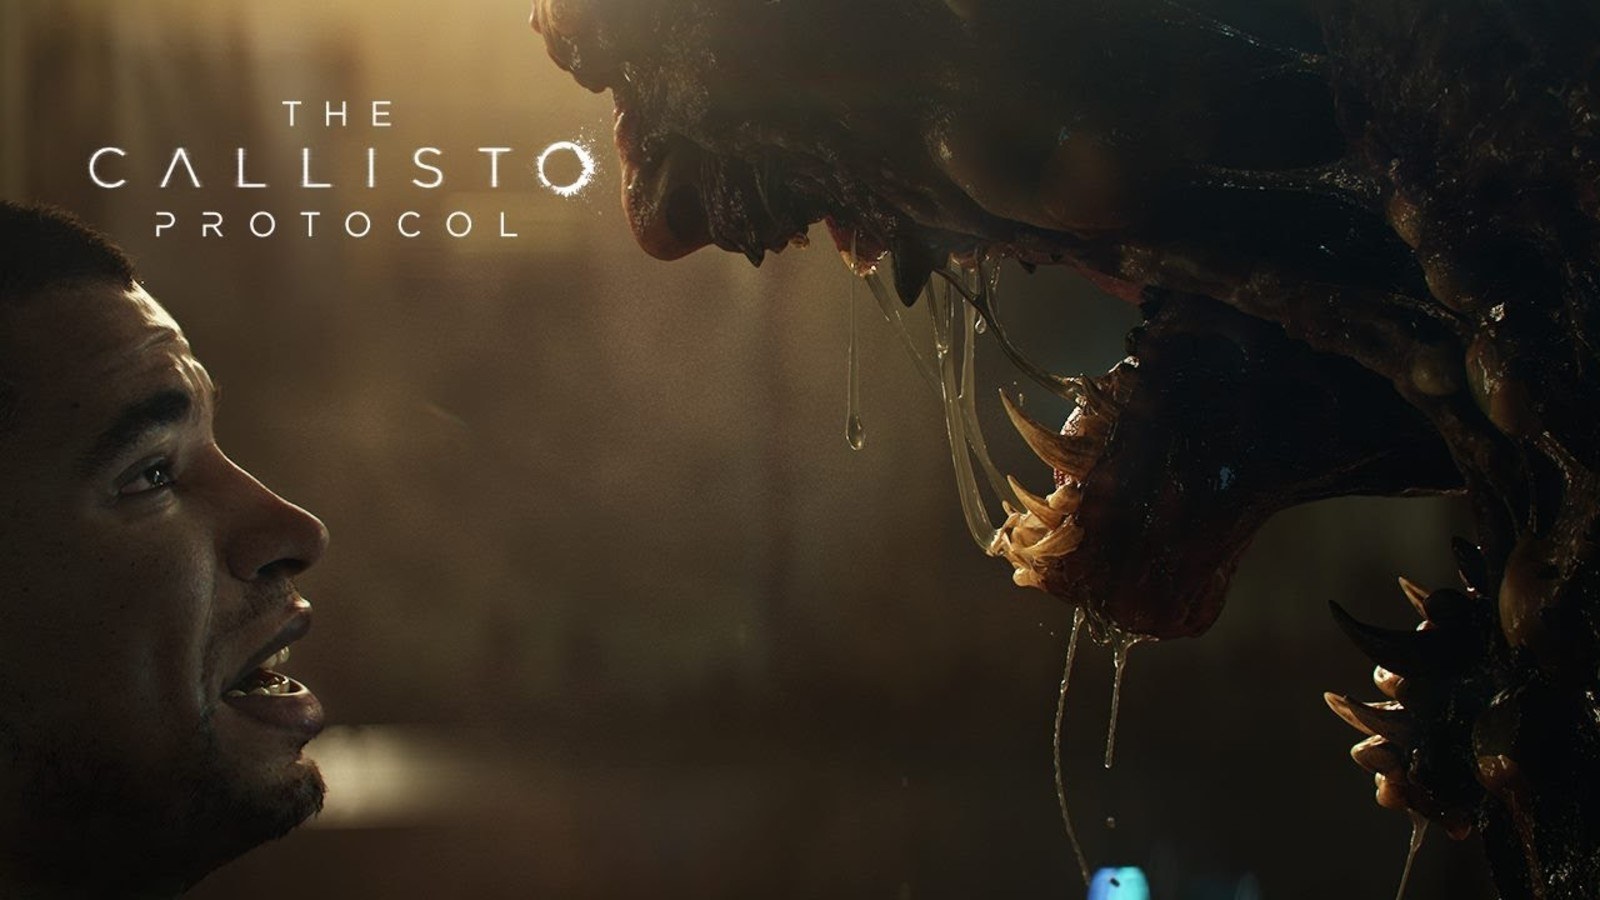 Digital Kitchen Heads Up Rise Dead Man Game Trailer for The Callisto  Protocol  Motion design  STASH  Motion design  STASH